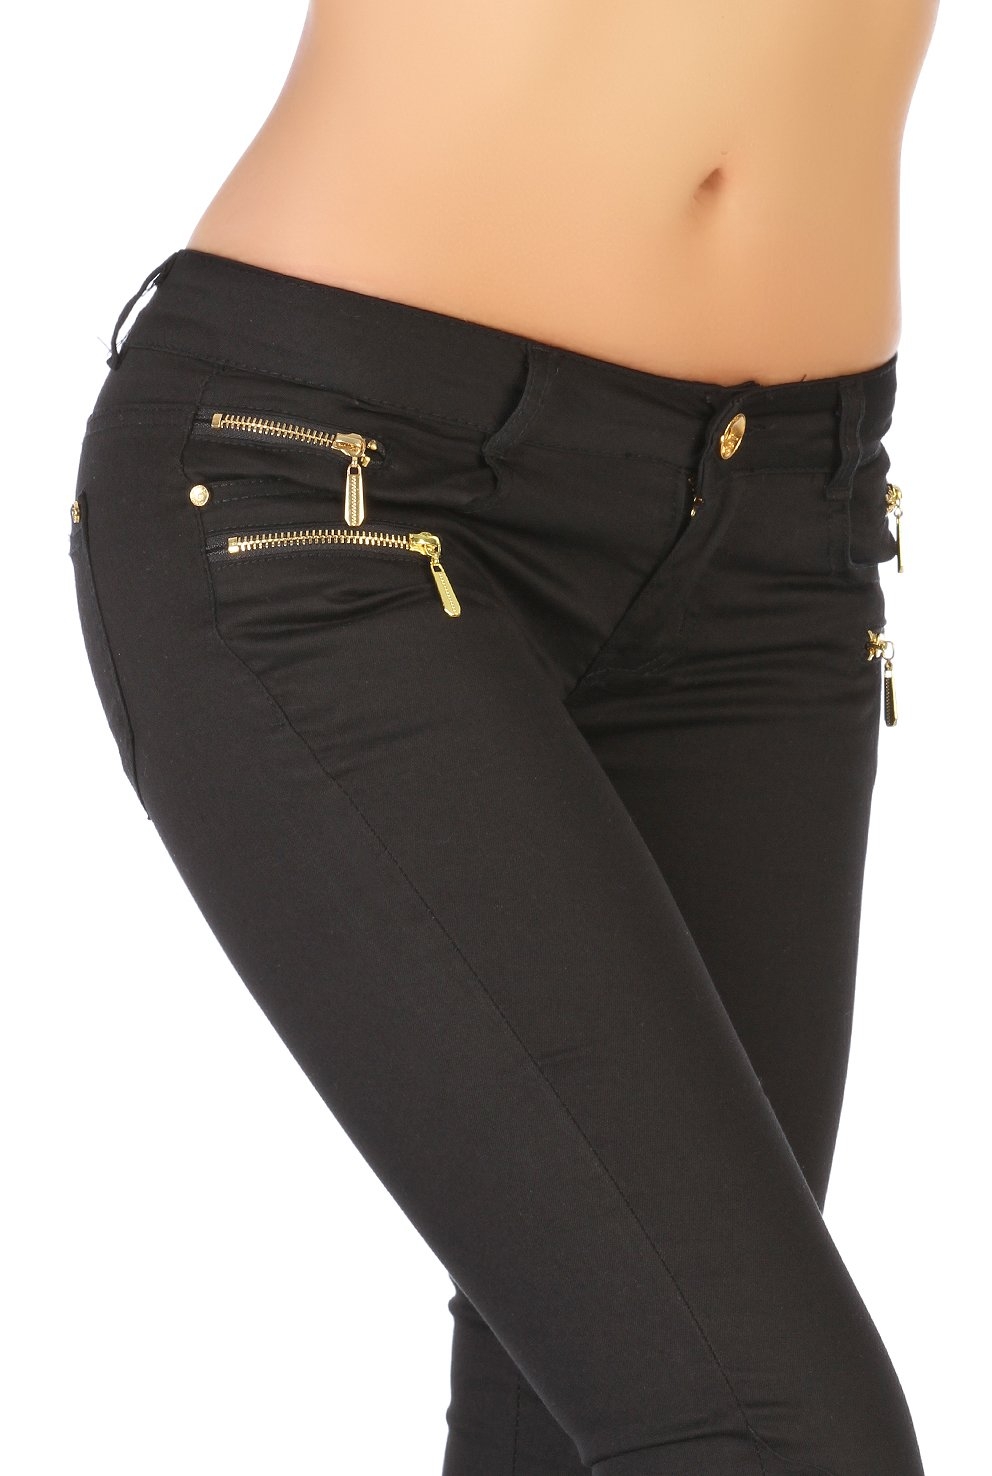 Jean Noir avec zip tendance le jean slim taille - Iro - Pickture